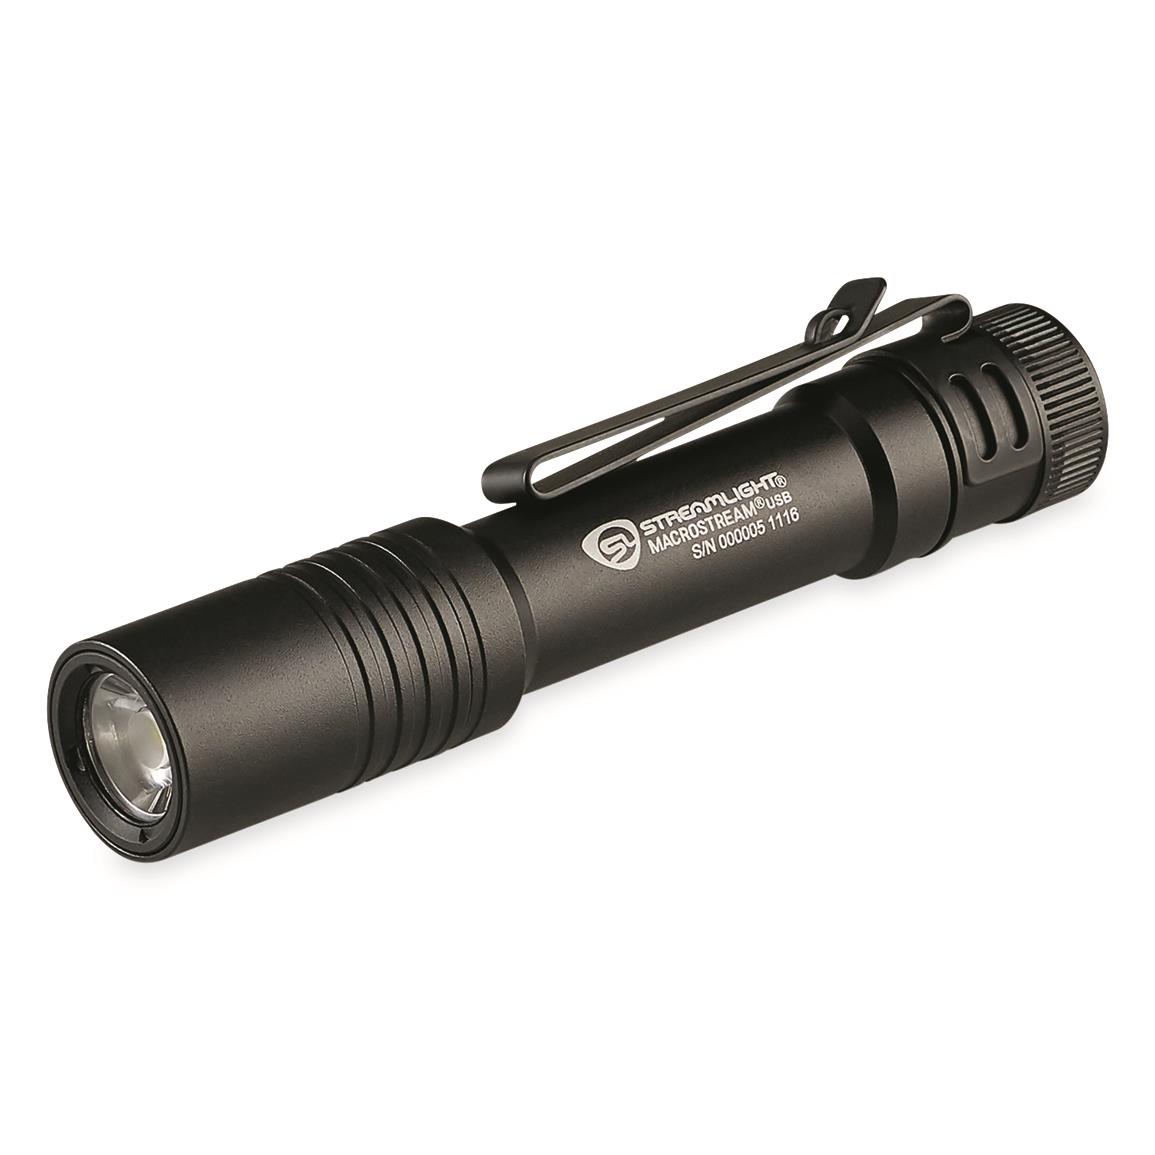 Streamlight MacroStream USB Everyday Carry Flashlight